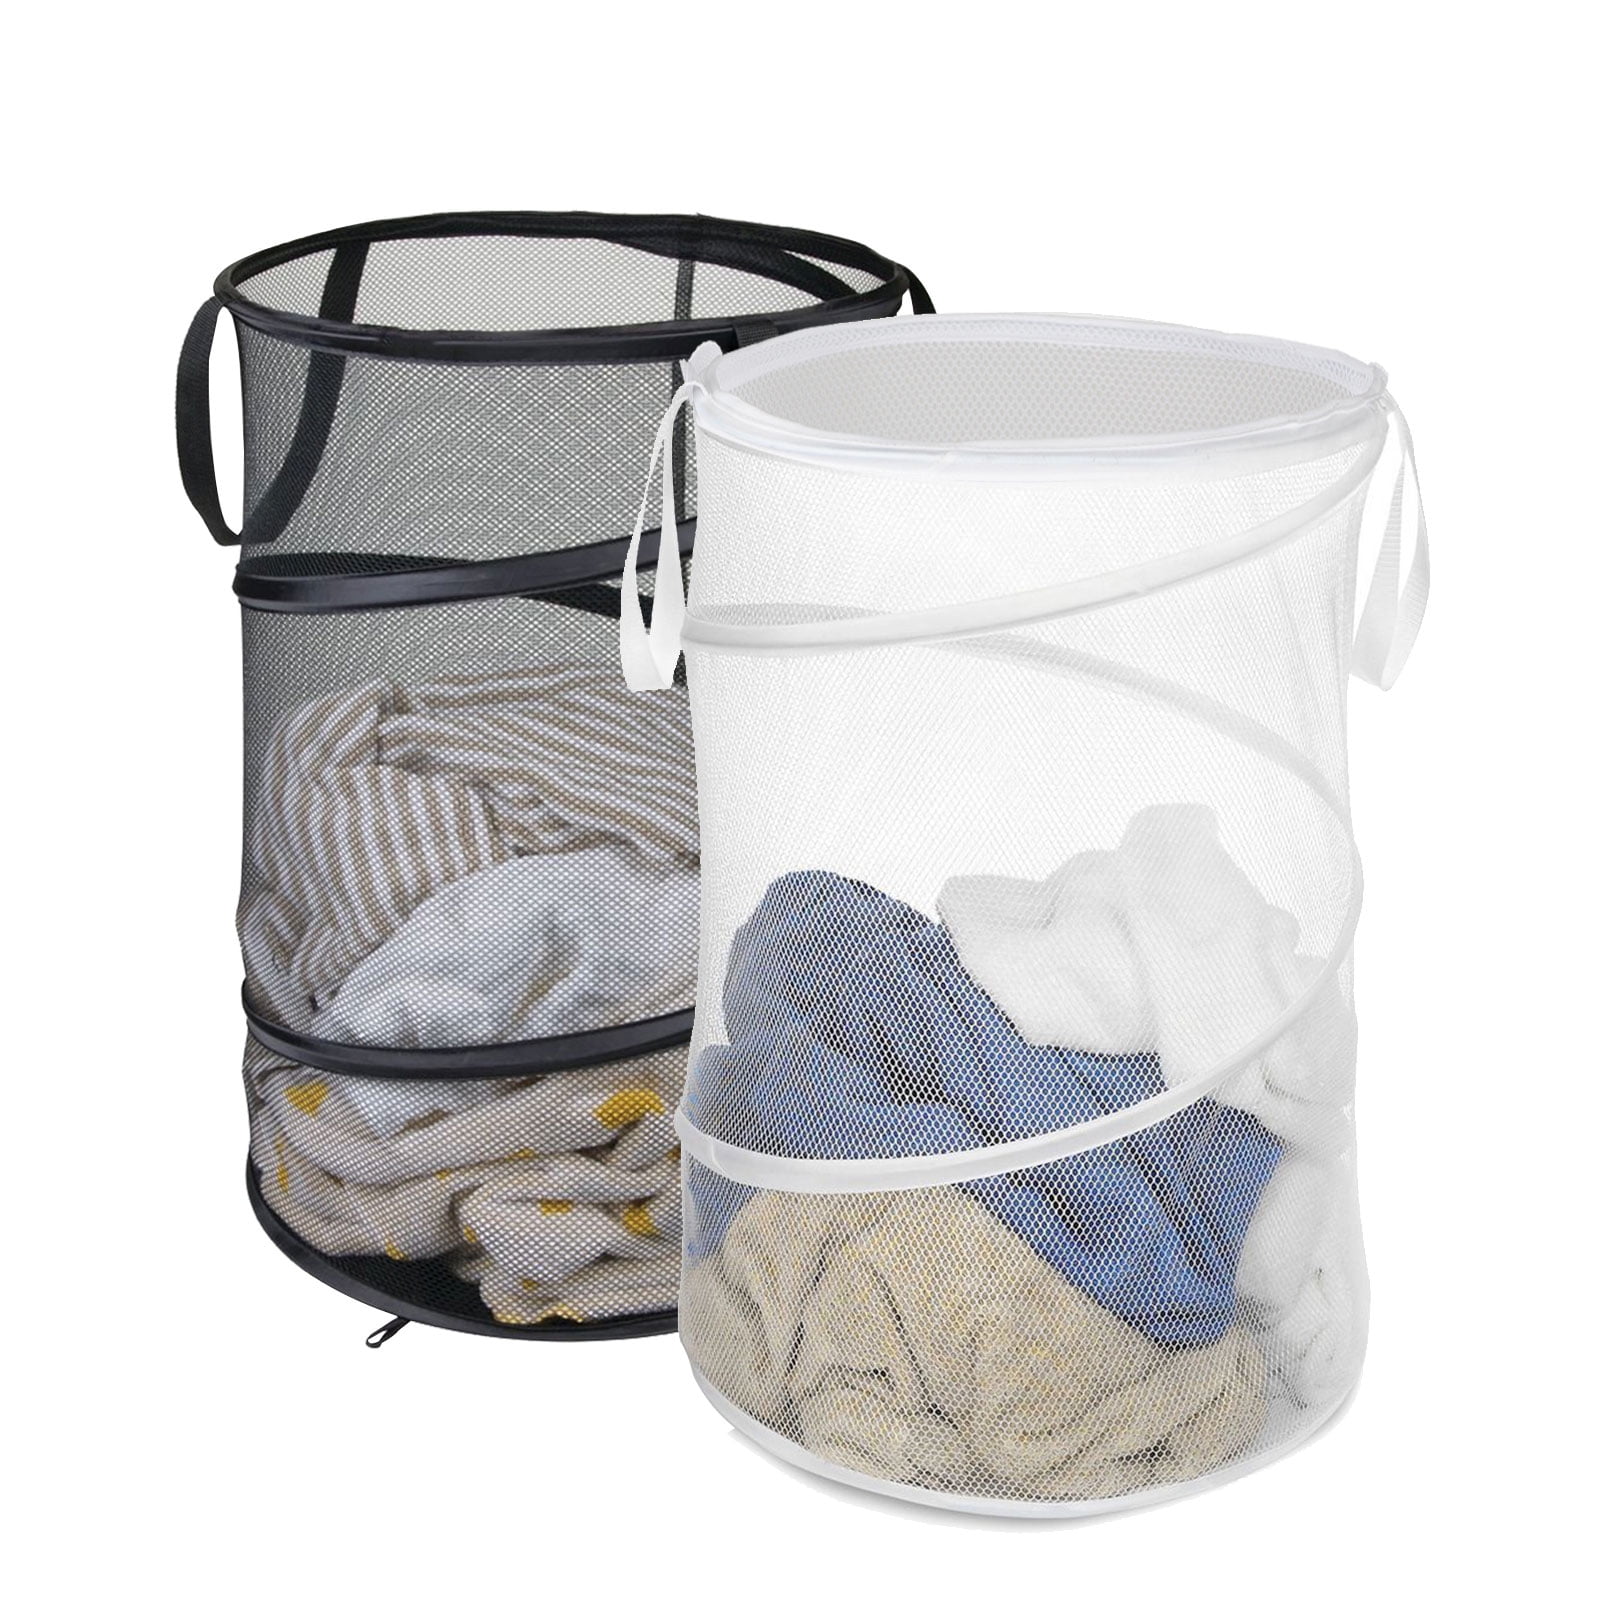 1x Mesh Basket Storage Laundry Bag Net Washing Basket Foldable Hamper Toy Cloth 